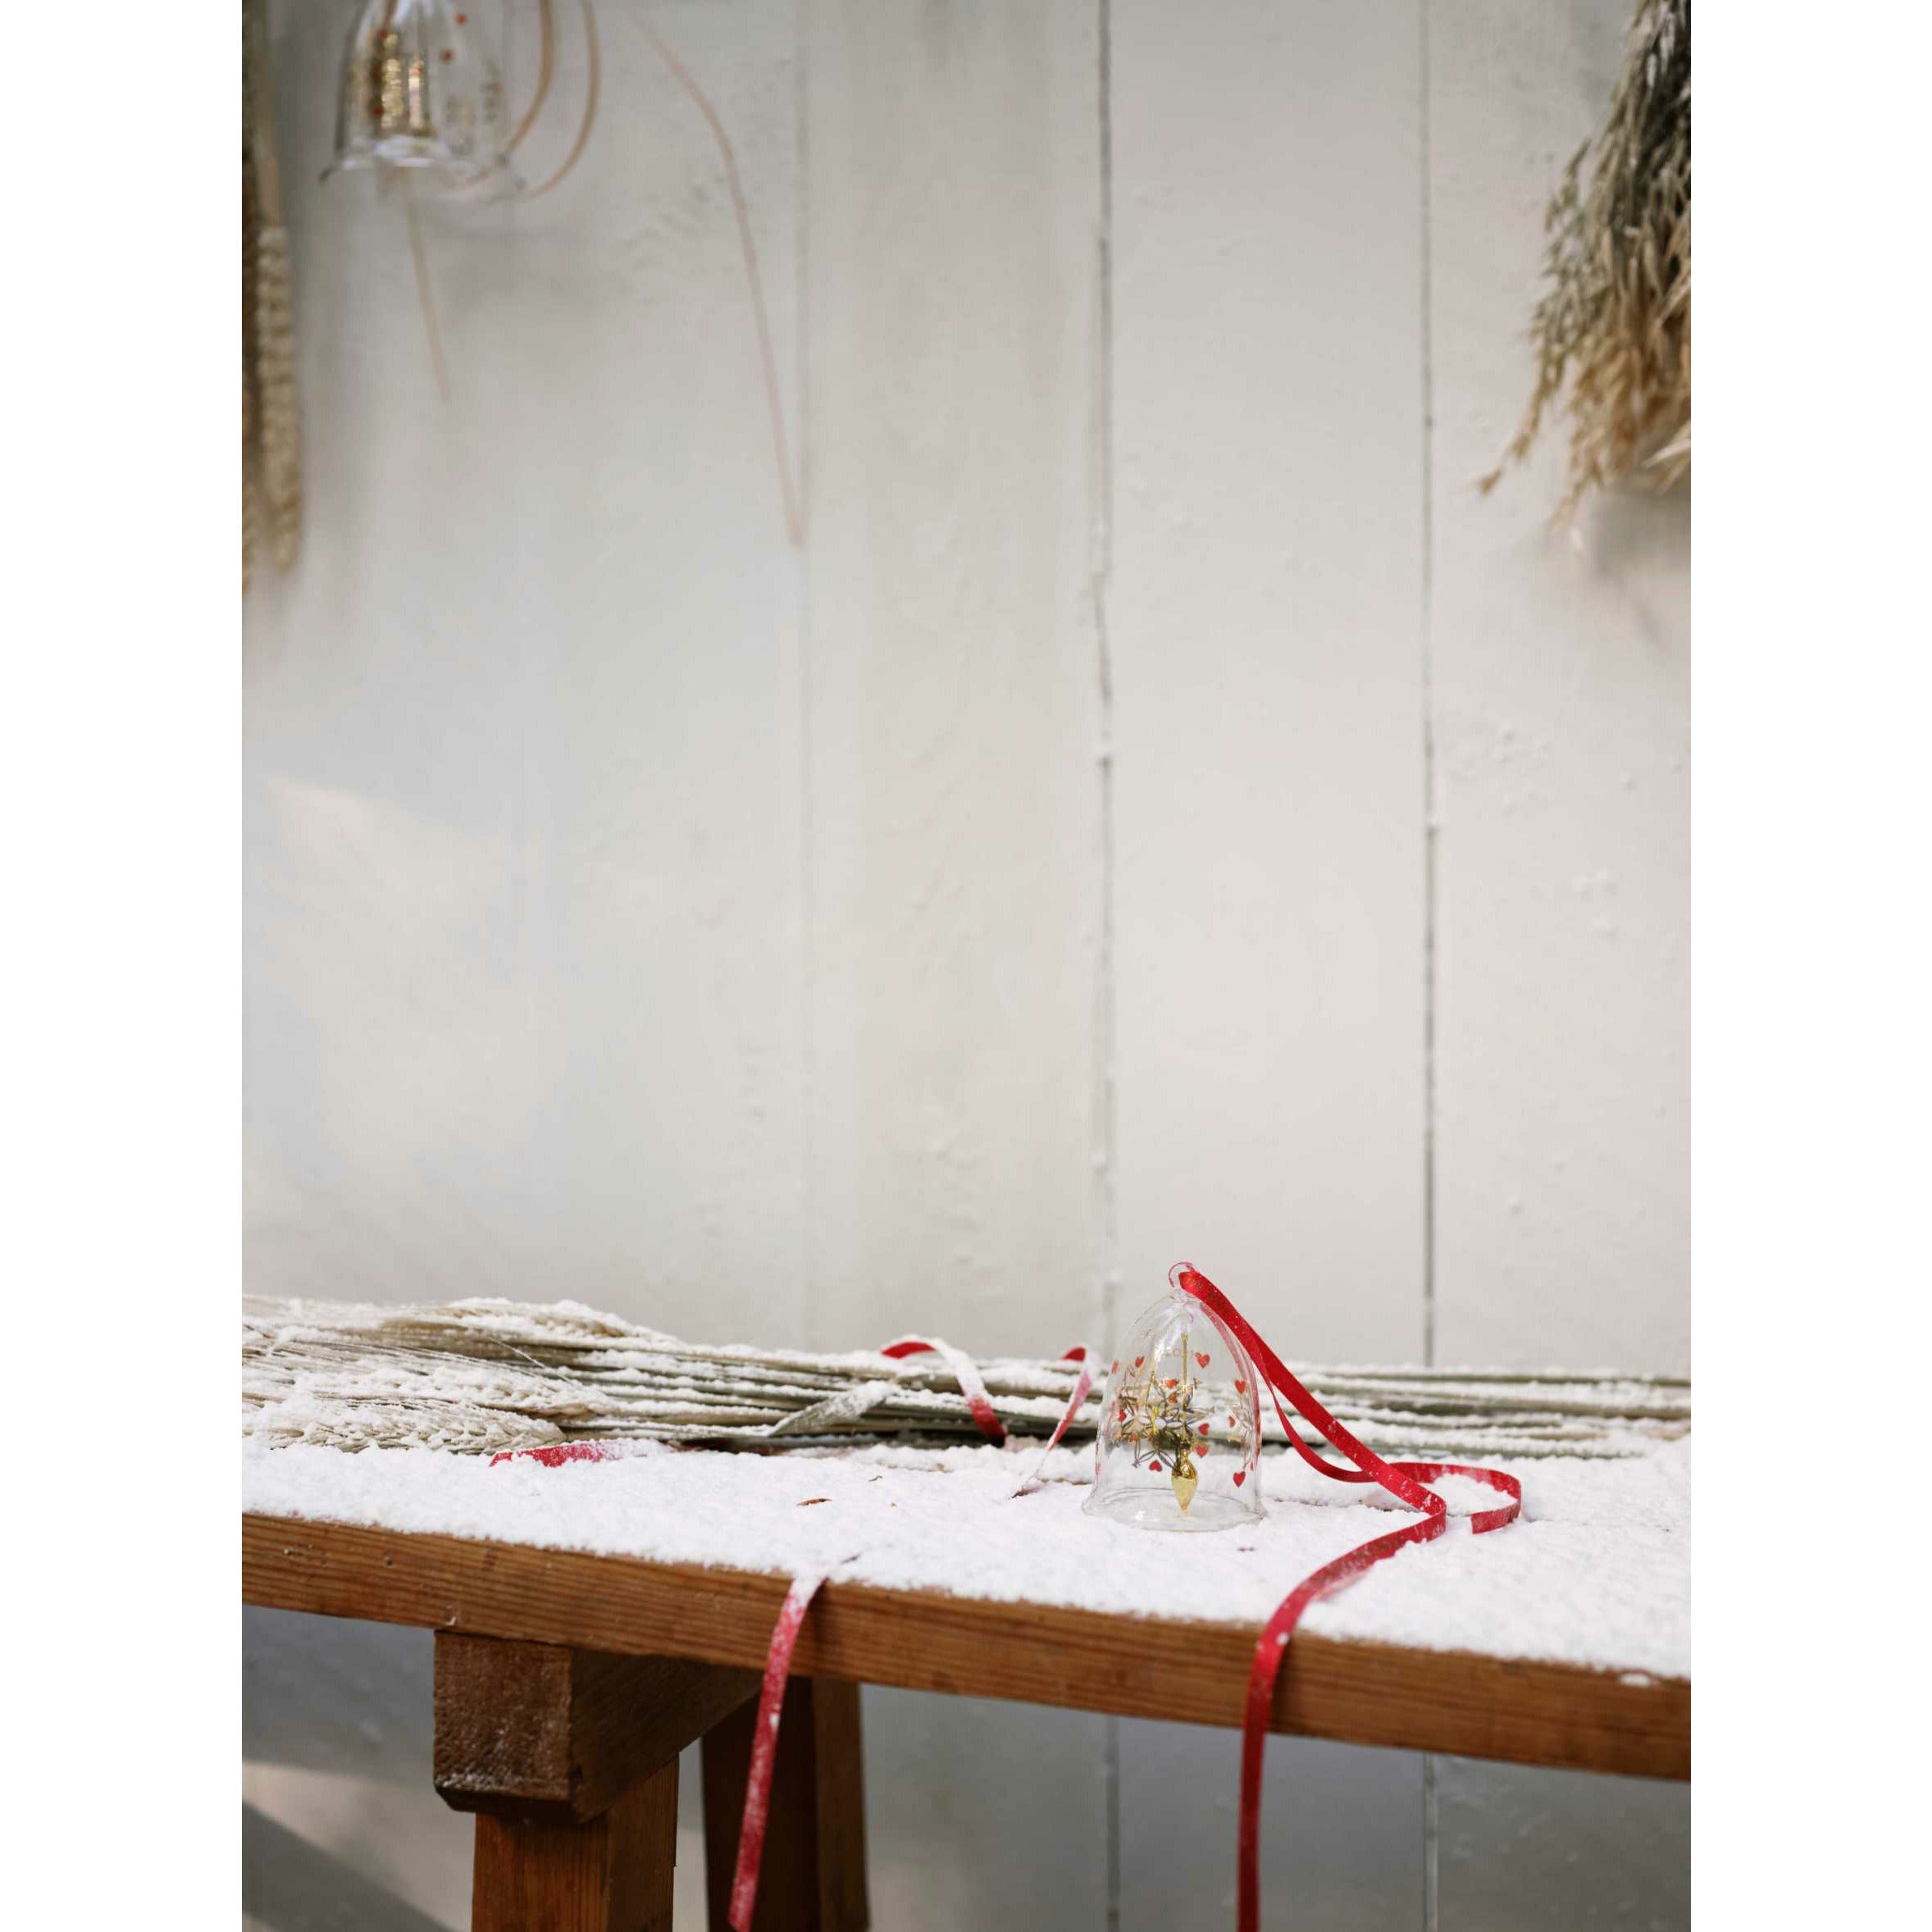 Holmegaard Ann Sofi Romme juleklokke, stor